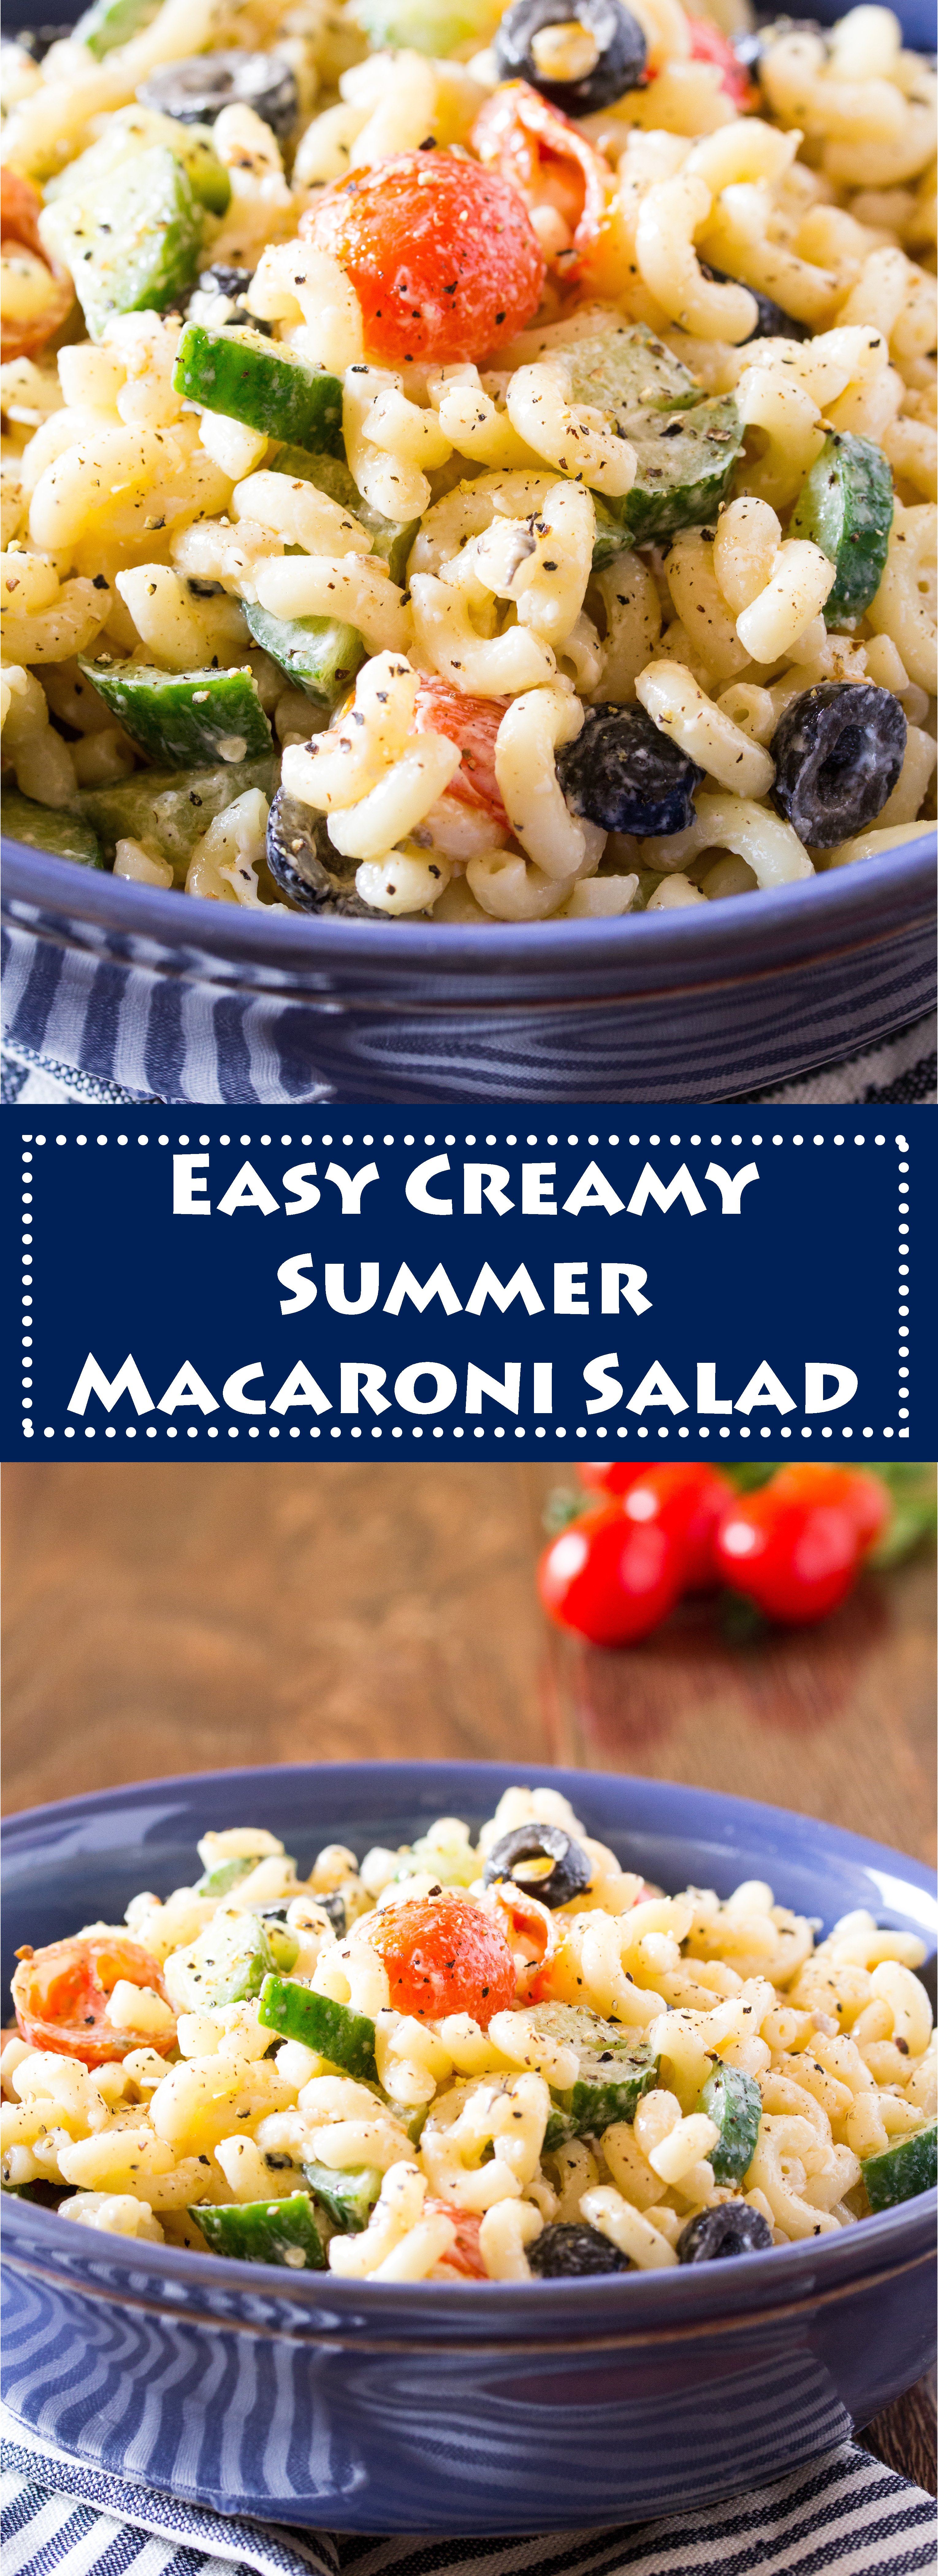 Easy Creamy Summer Macaroni Salad